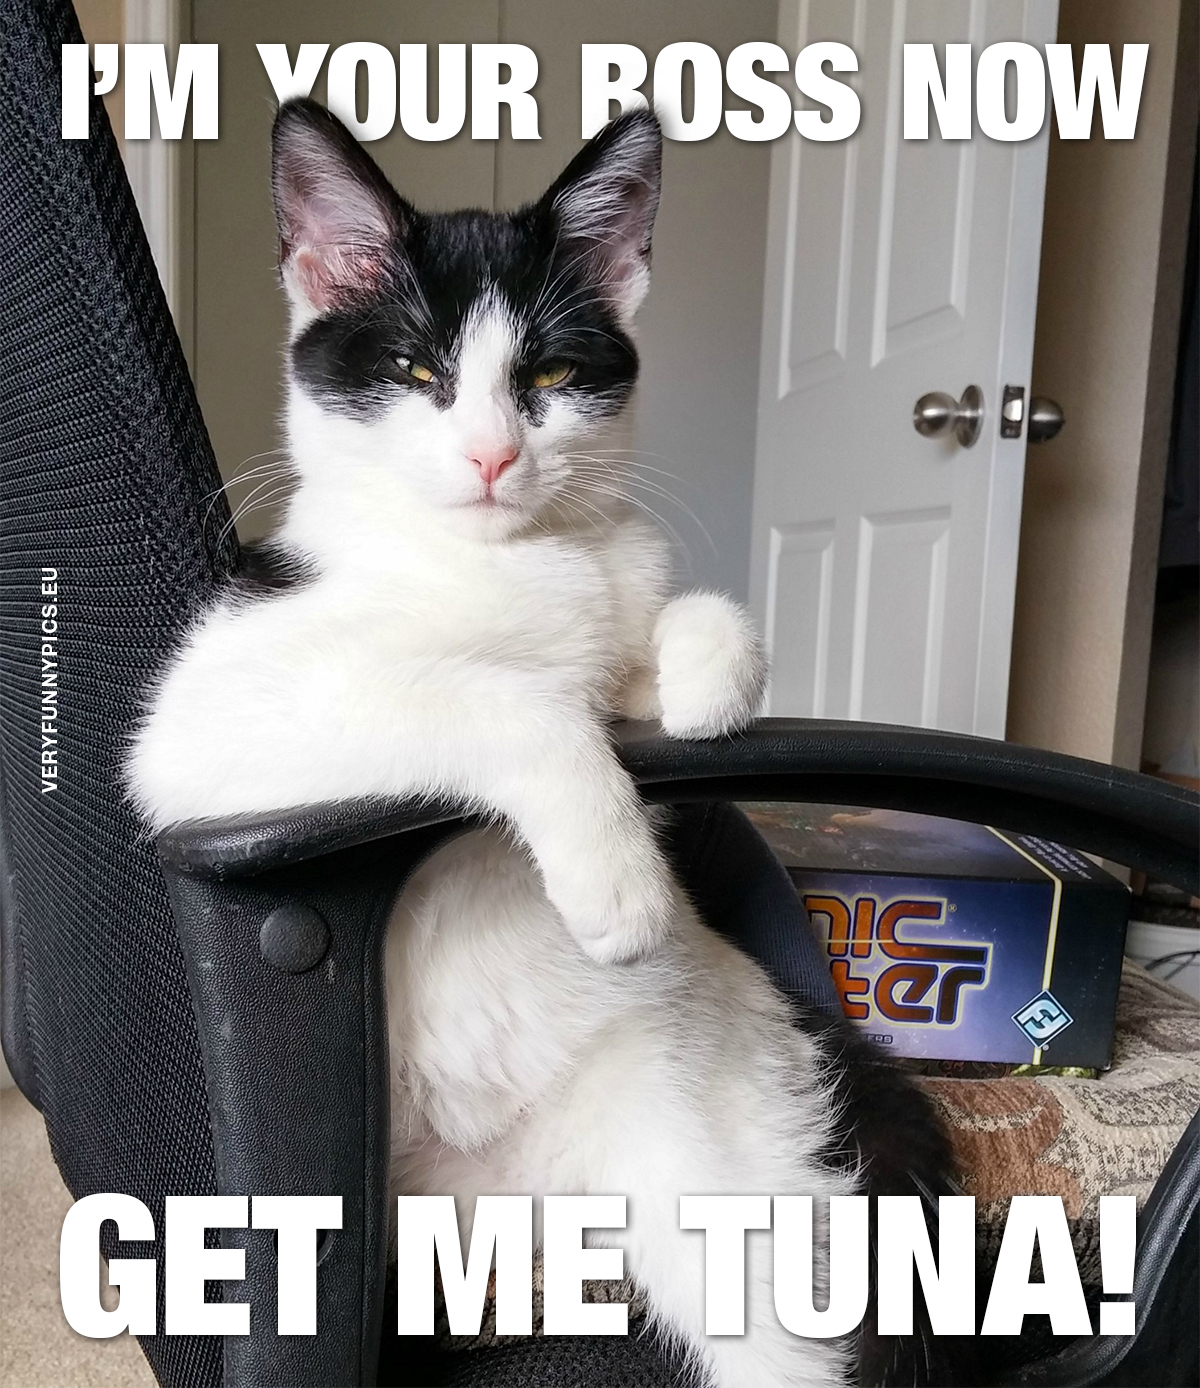 Boss cat in office chair